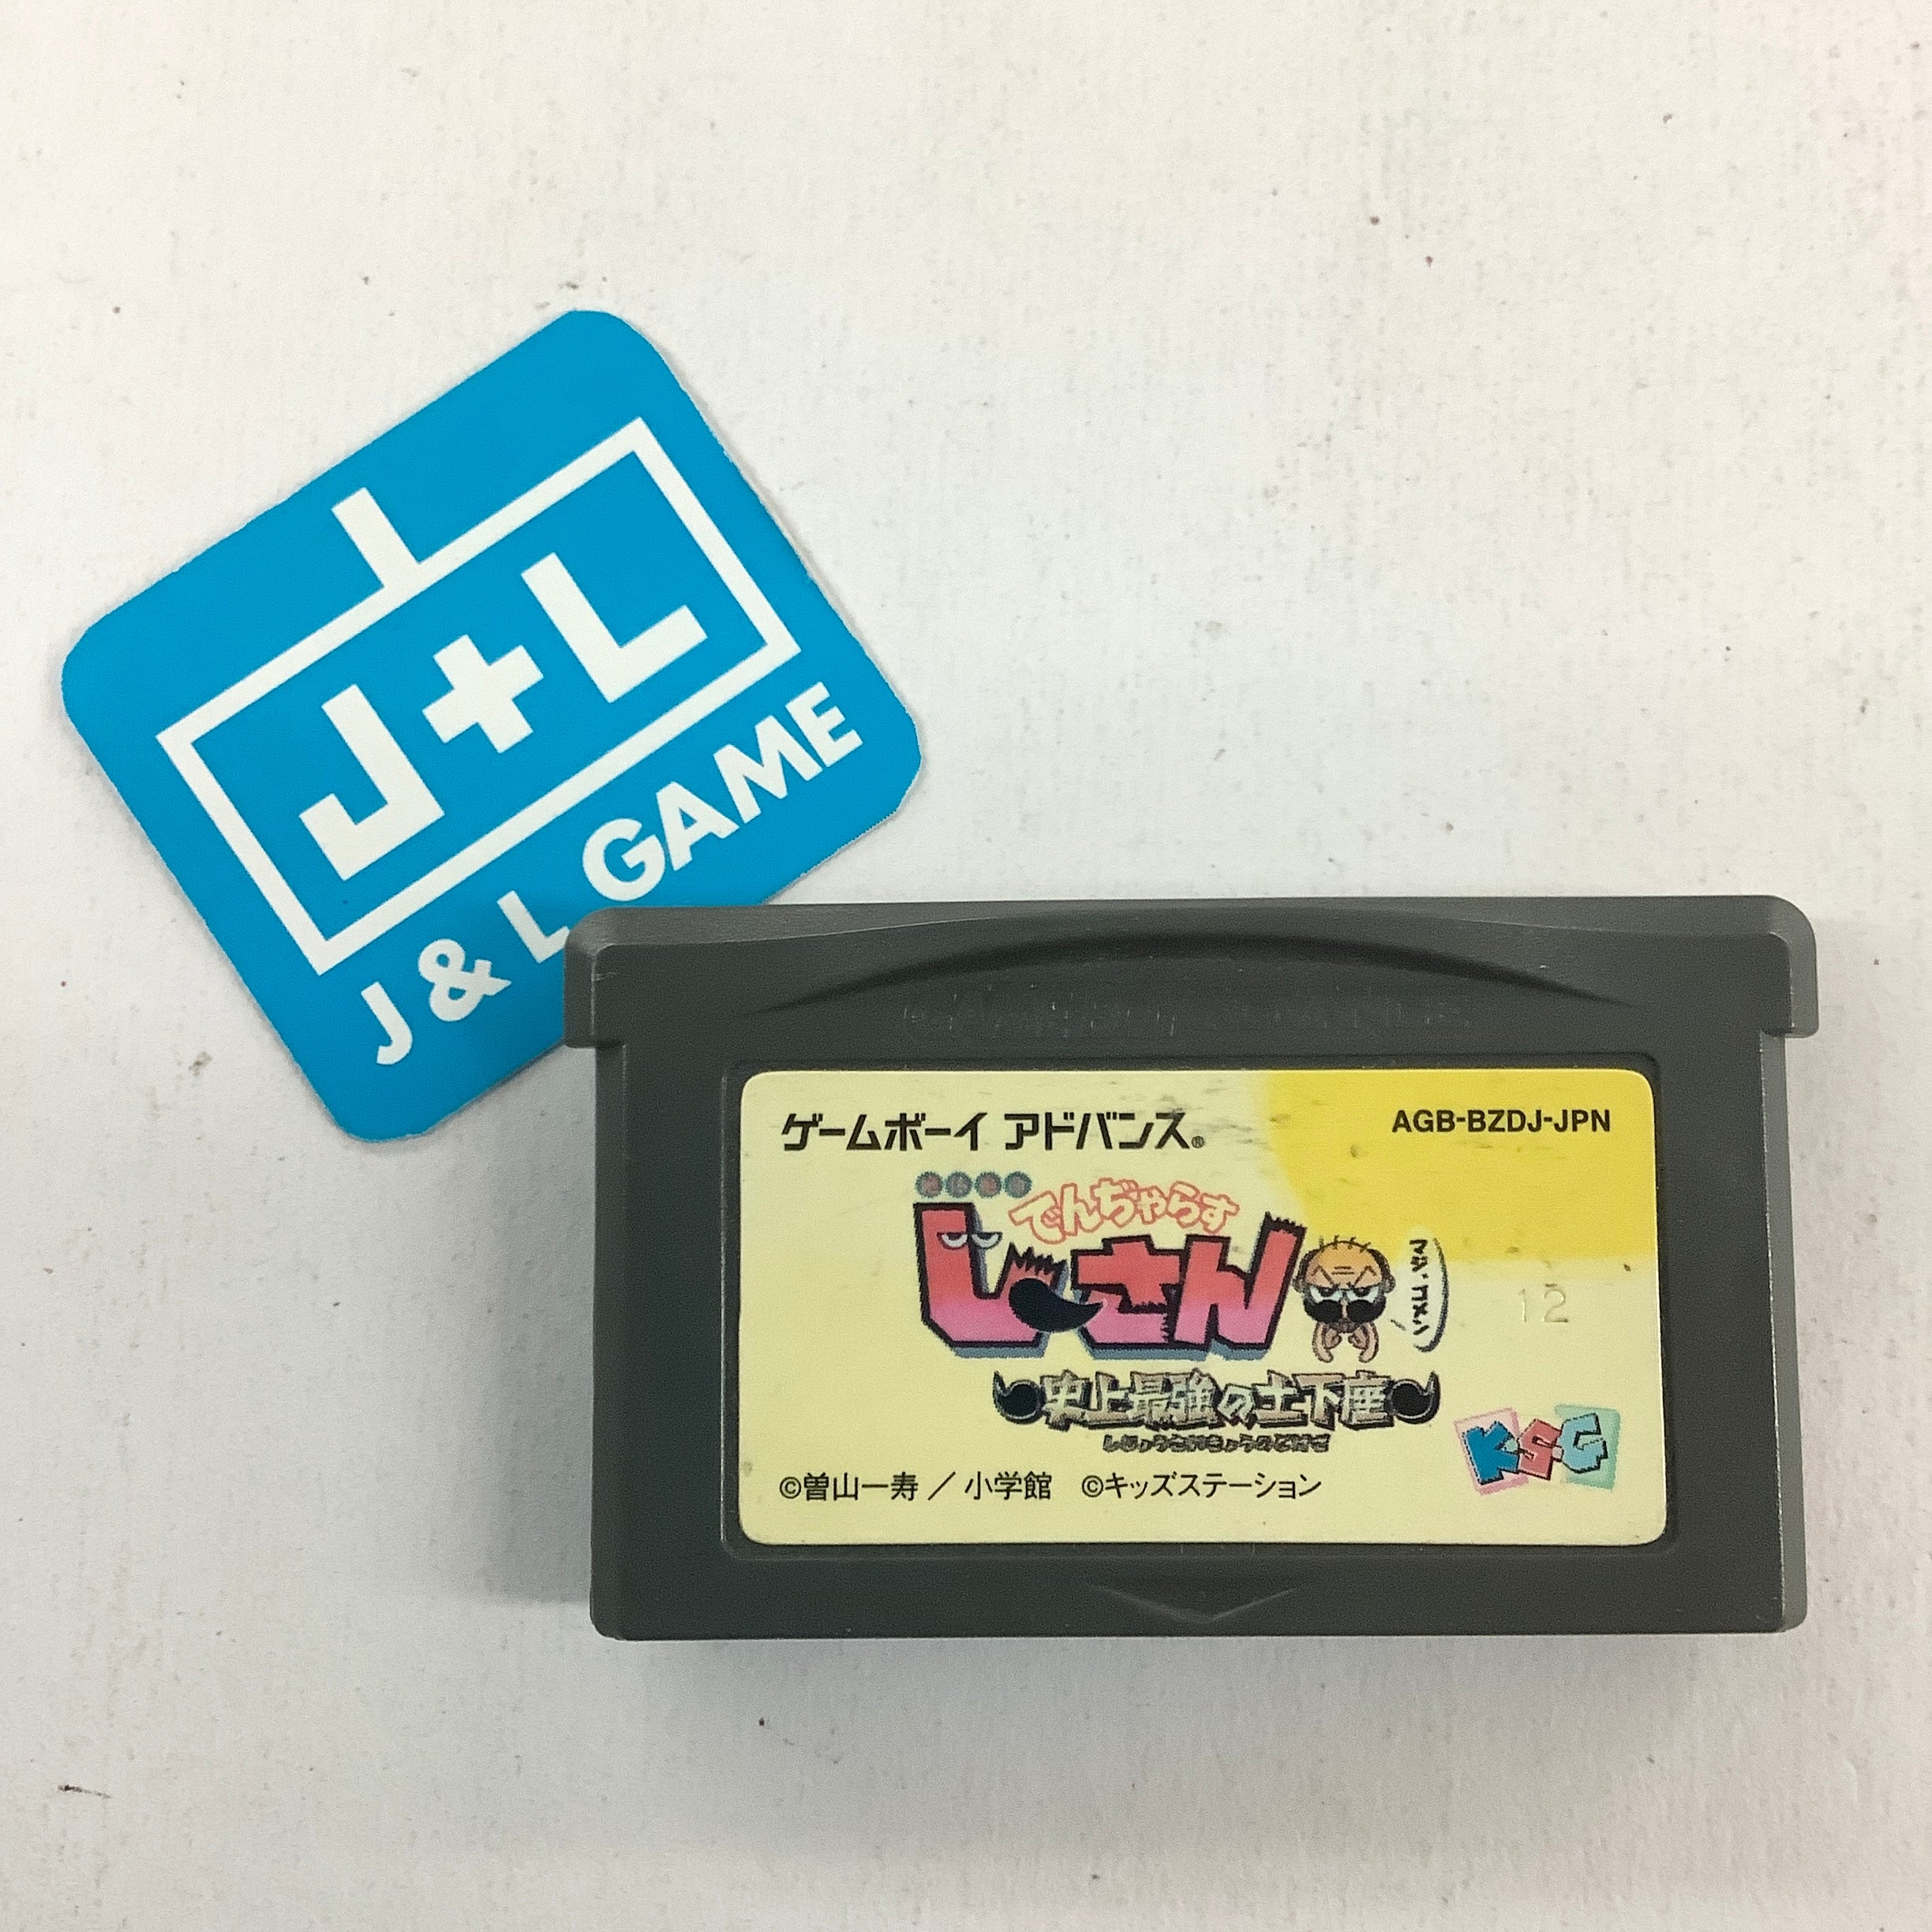 Zettai Zetsumei Dangerous Jiisan: Shijou Saikyou no Dogeza - (GBA) Game Boy Advance [Pre-Owned] (Japanese Import) Video Games Kids Station   